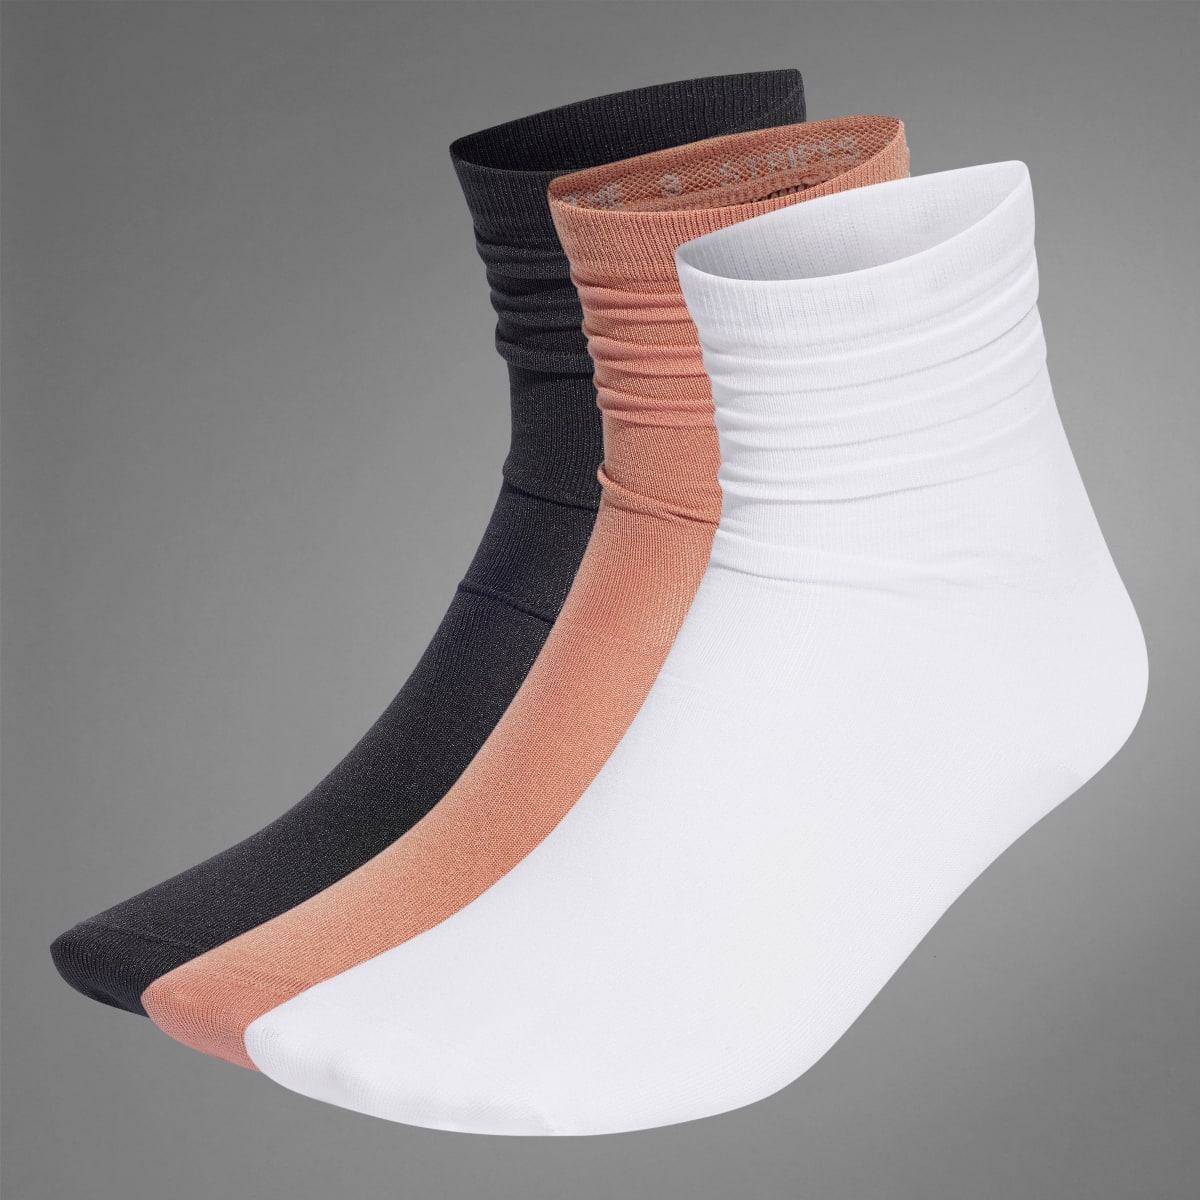 Adidas Collective Power Mid-Cut Crew Length Socks 3 Pairs. 8